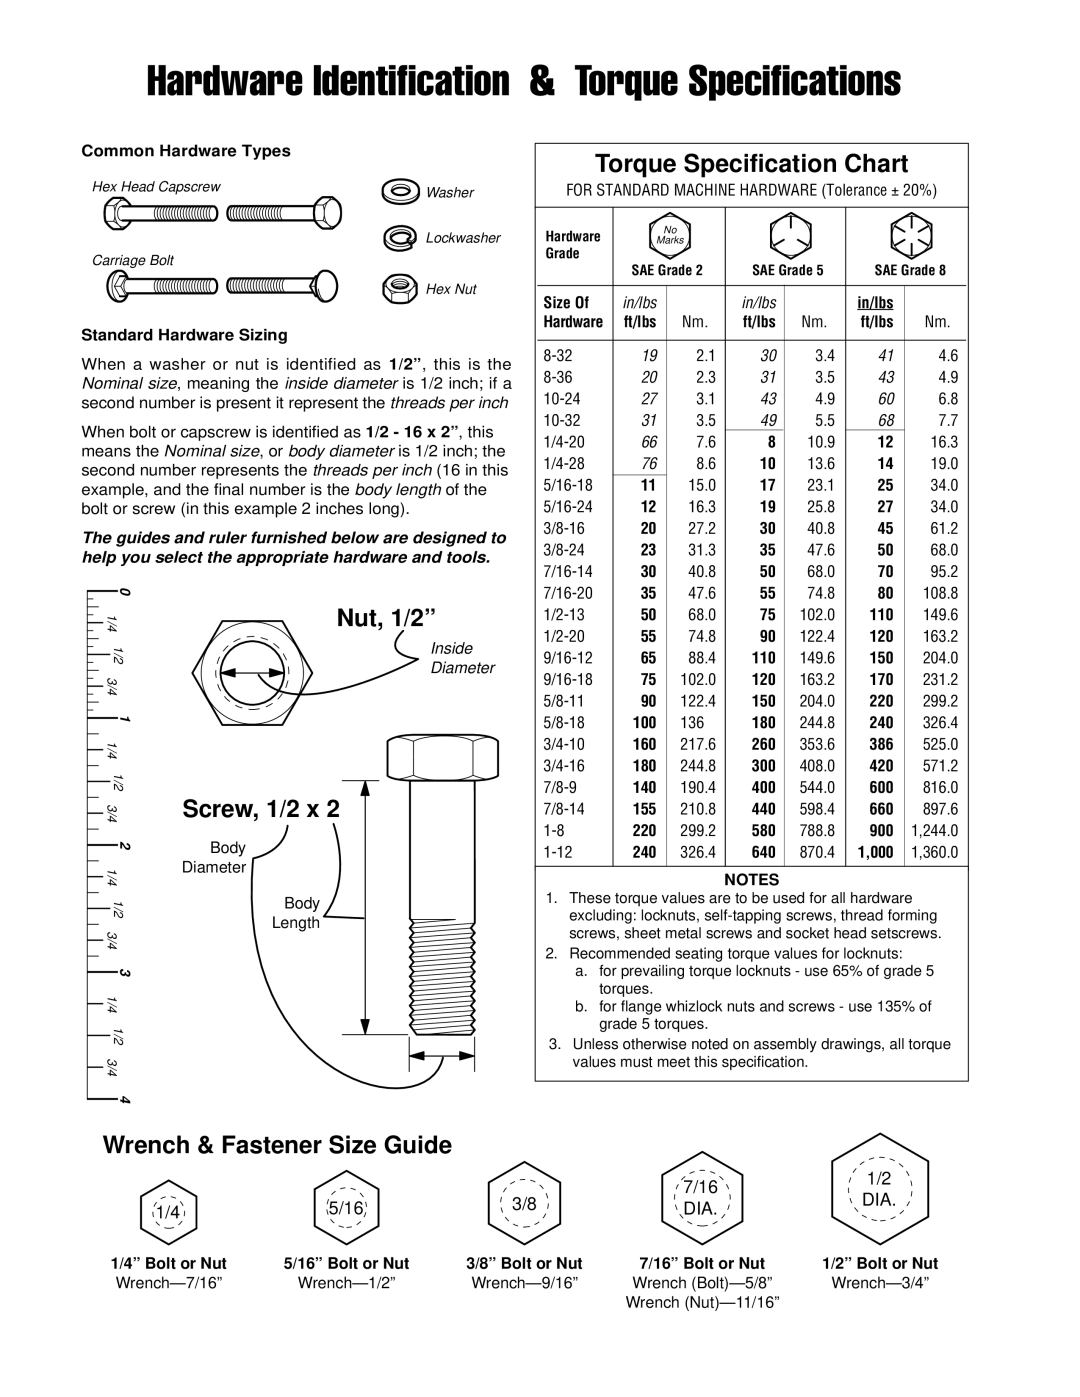 Simplicity 1693757 Hardware Identification & Torque Specifications, Torque Specification Chart, Nut, 1/2”, Screw, 1/2 